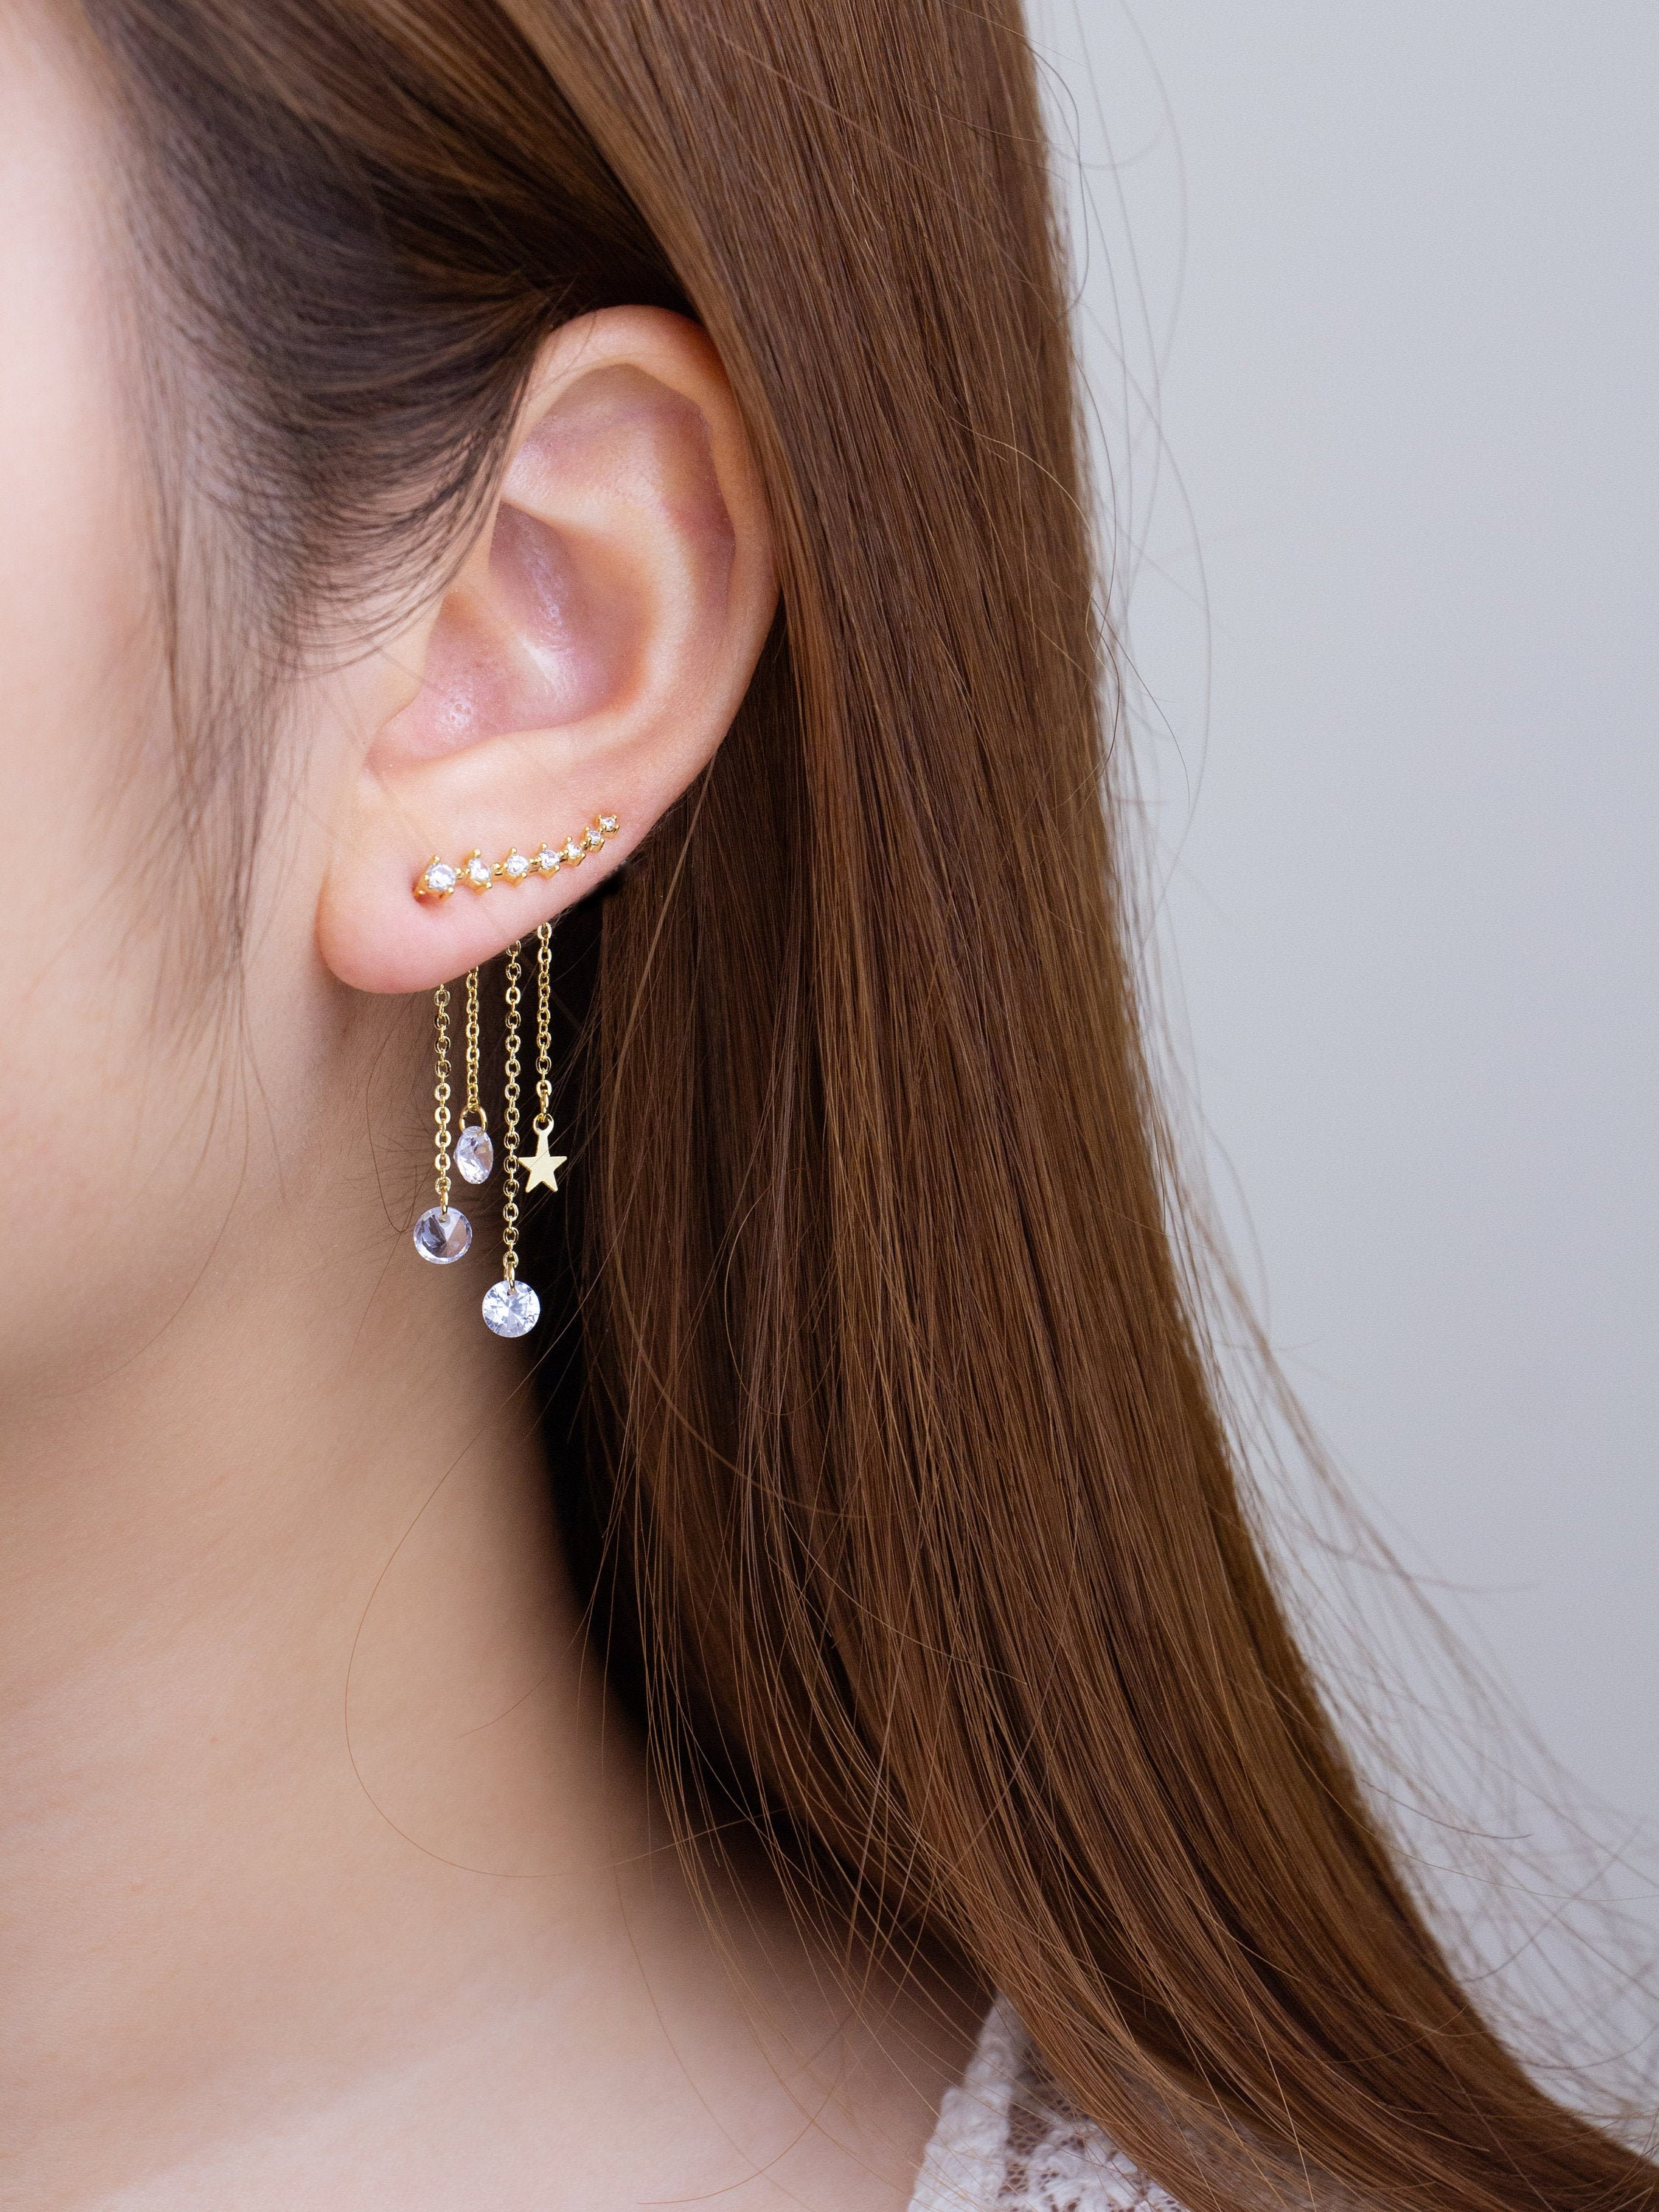 Polytree Earrings Star Rhinestone Inlaid Chain Tassel Climber Ear Stud for Womens Girls Charm Accessories 